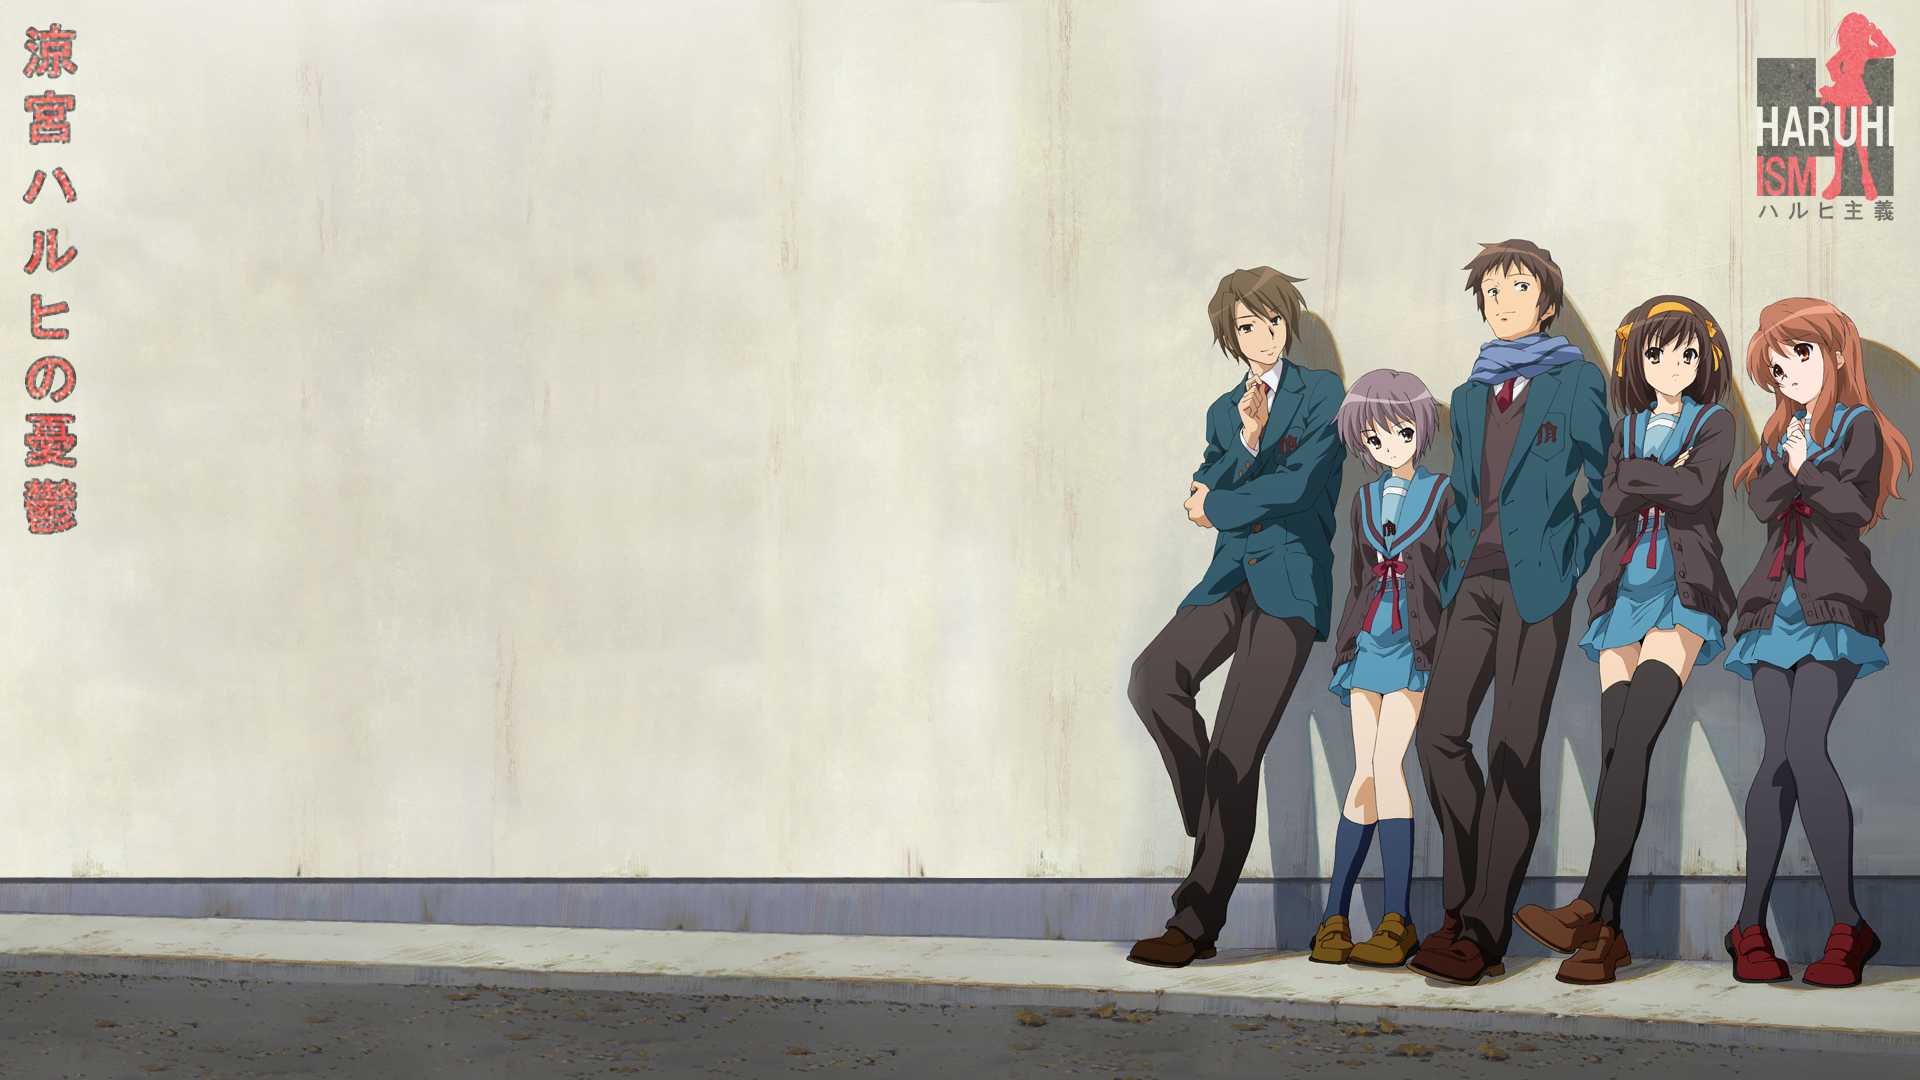 Anime 1920x1080 The Melancholy of Haruhi Suzumiya anime girls anime boys anime wall leaning pantyhose